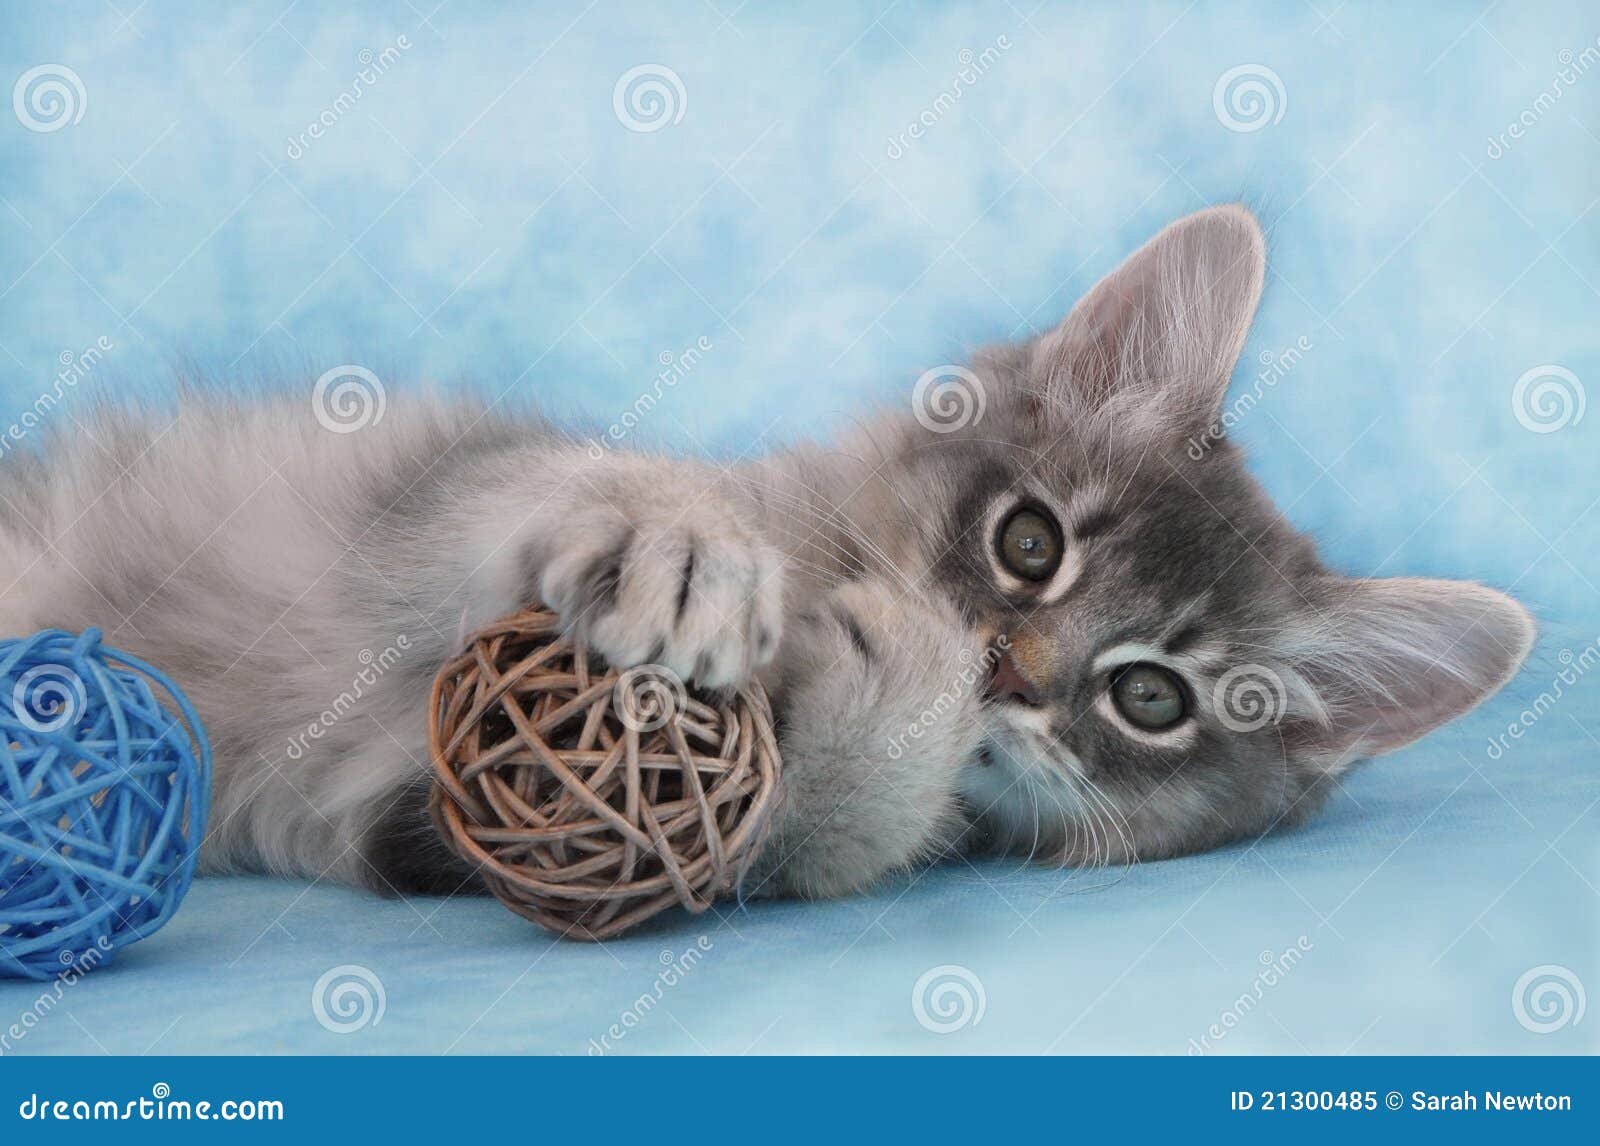 kitten-playing-ball-21300485.jpg